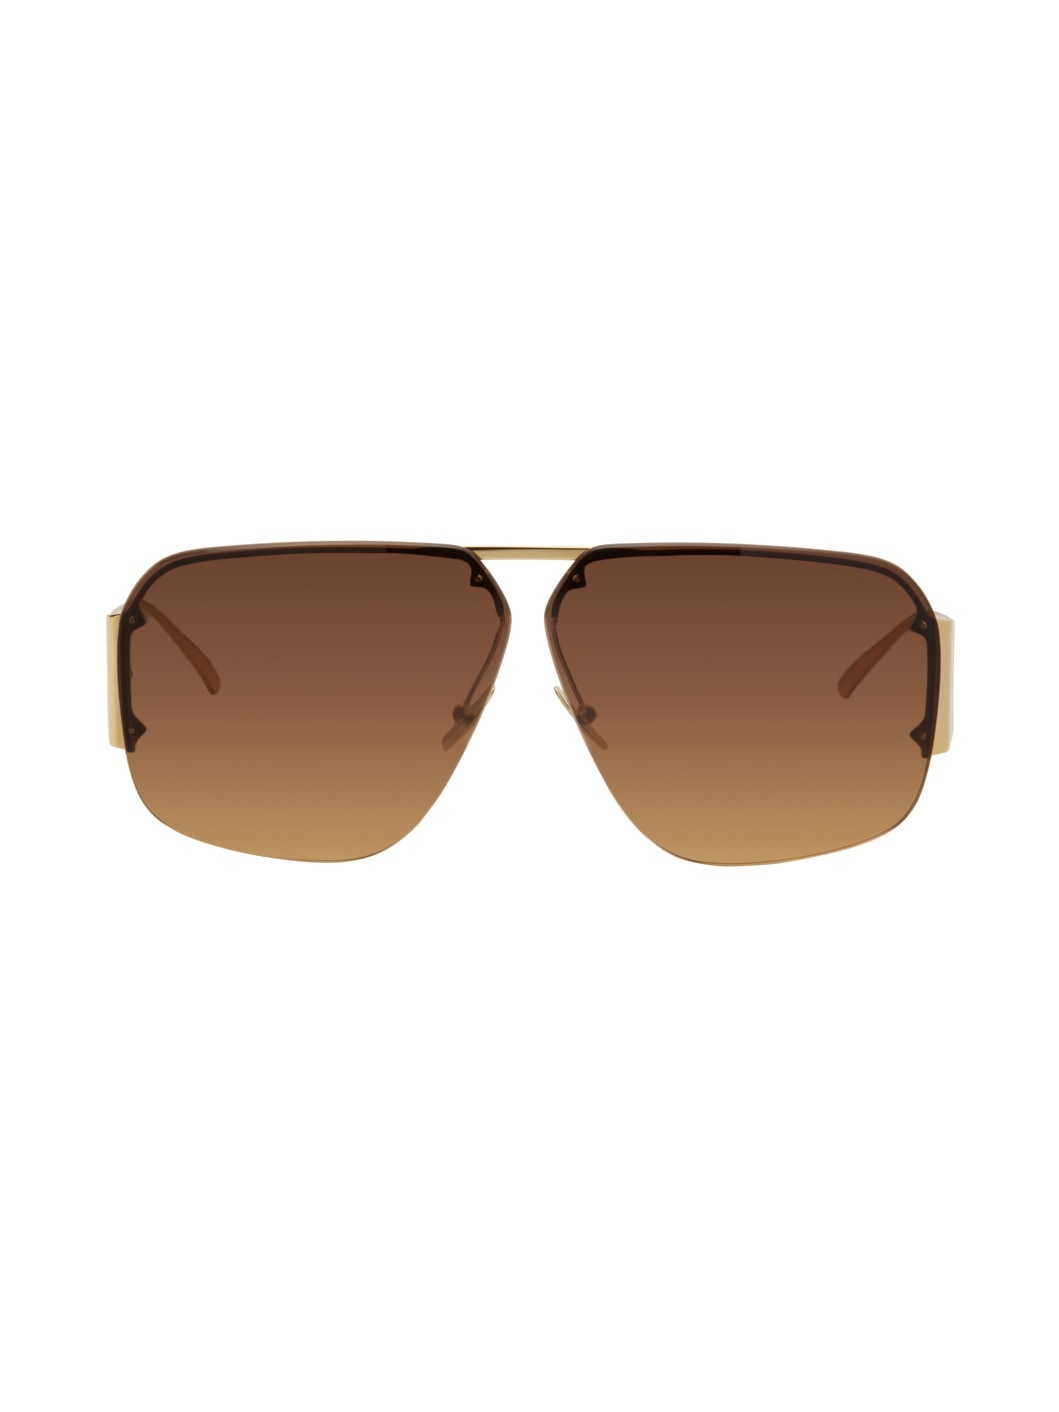 Gold Rimless Sunglasses - 1